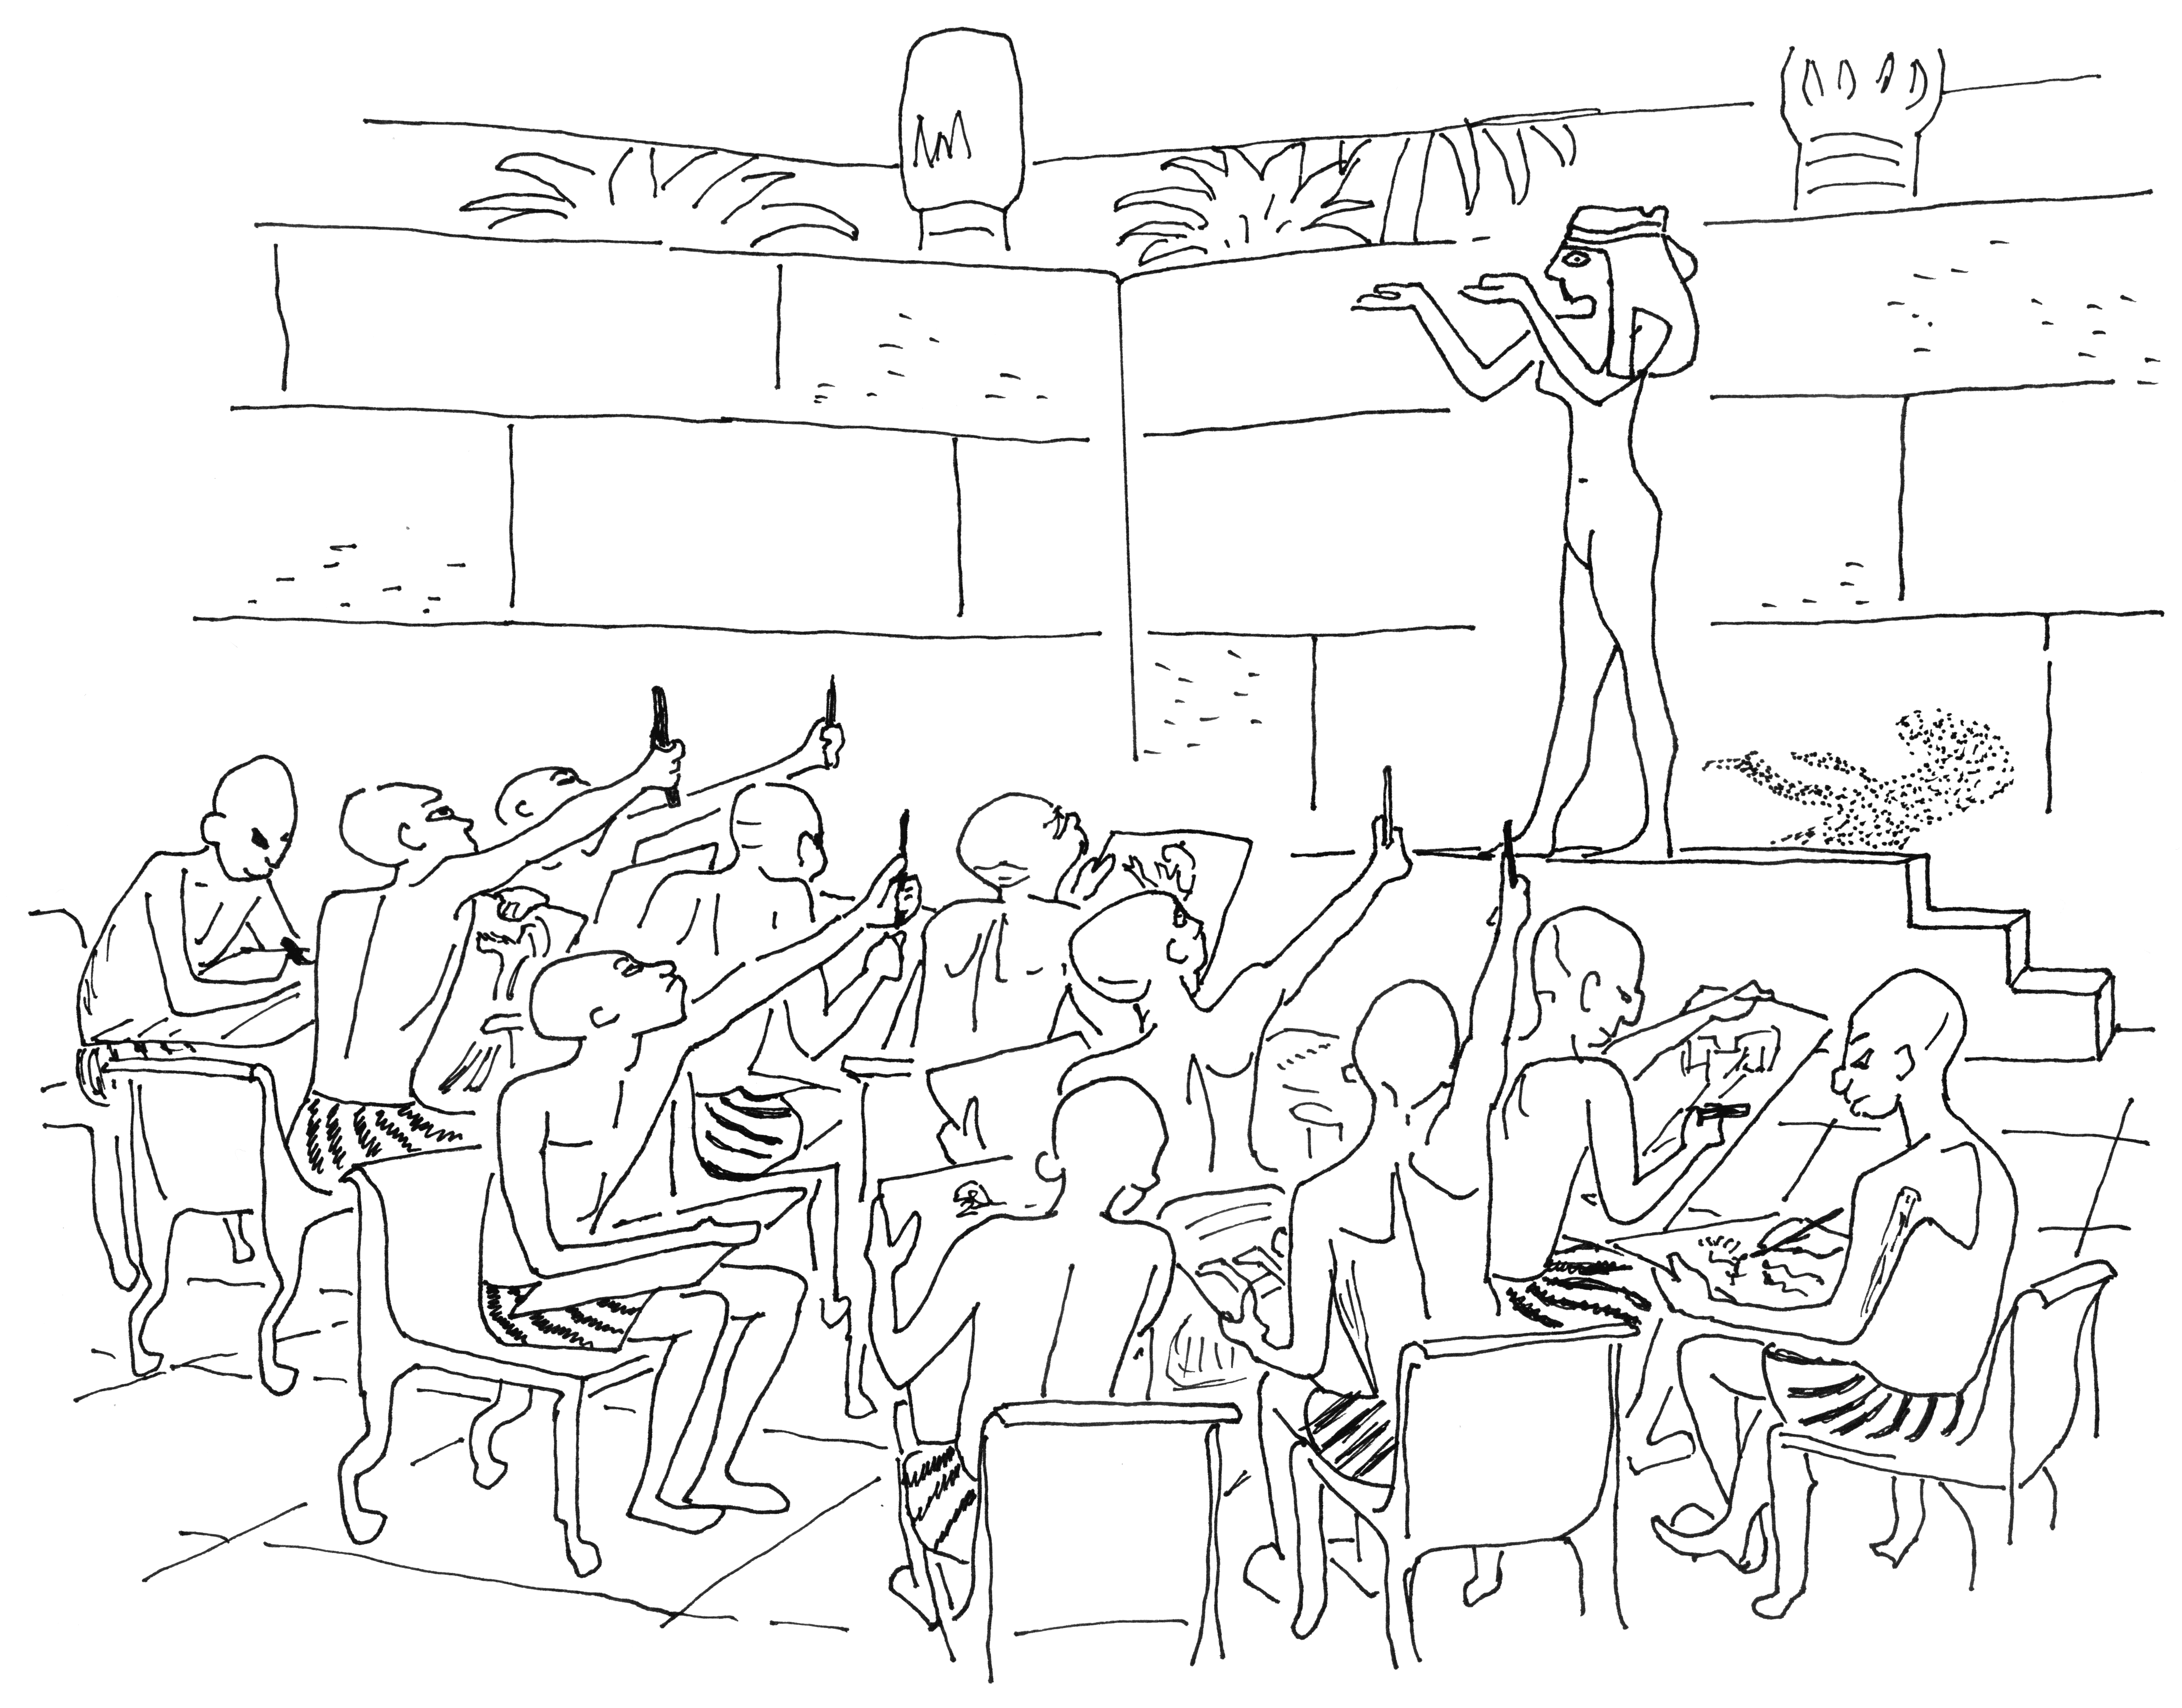 Figure 3: After Alain’s Egyptian Life Class cartoon